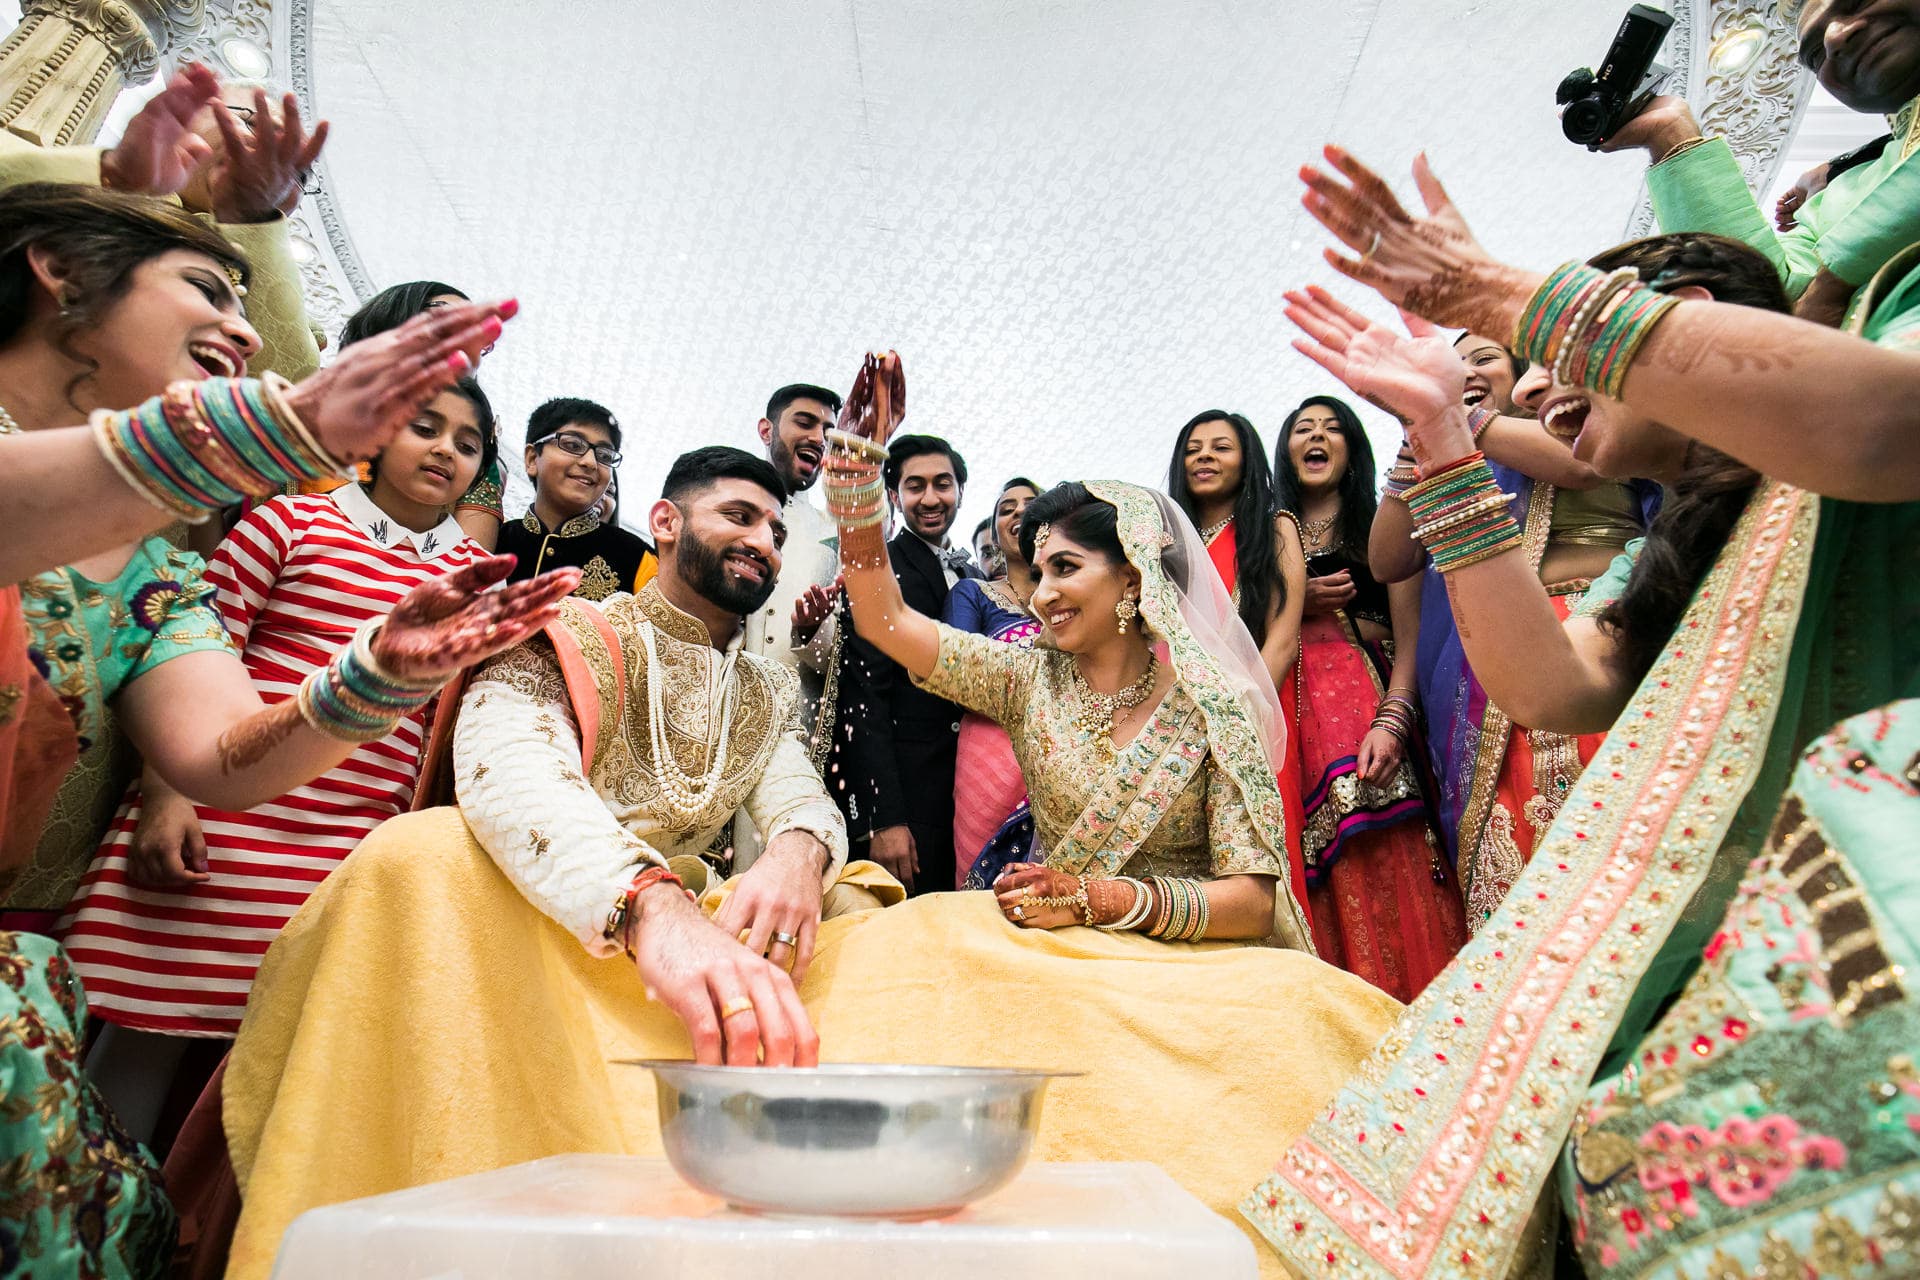 Koda kodi game after Hindu Wedding